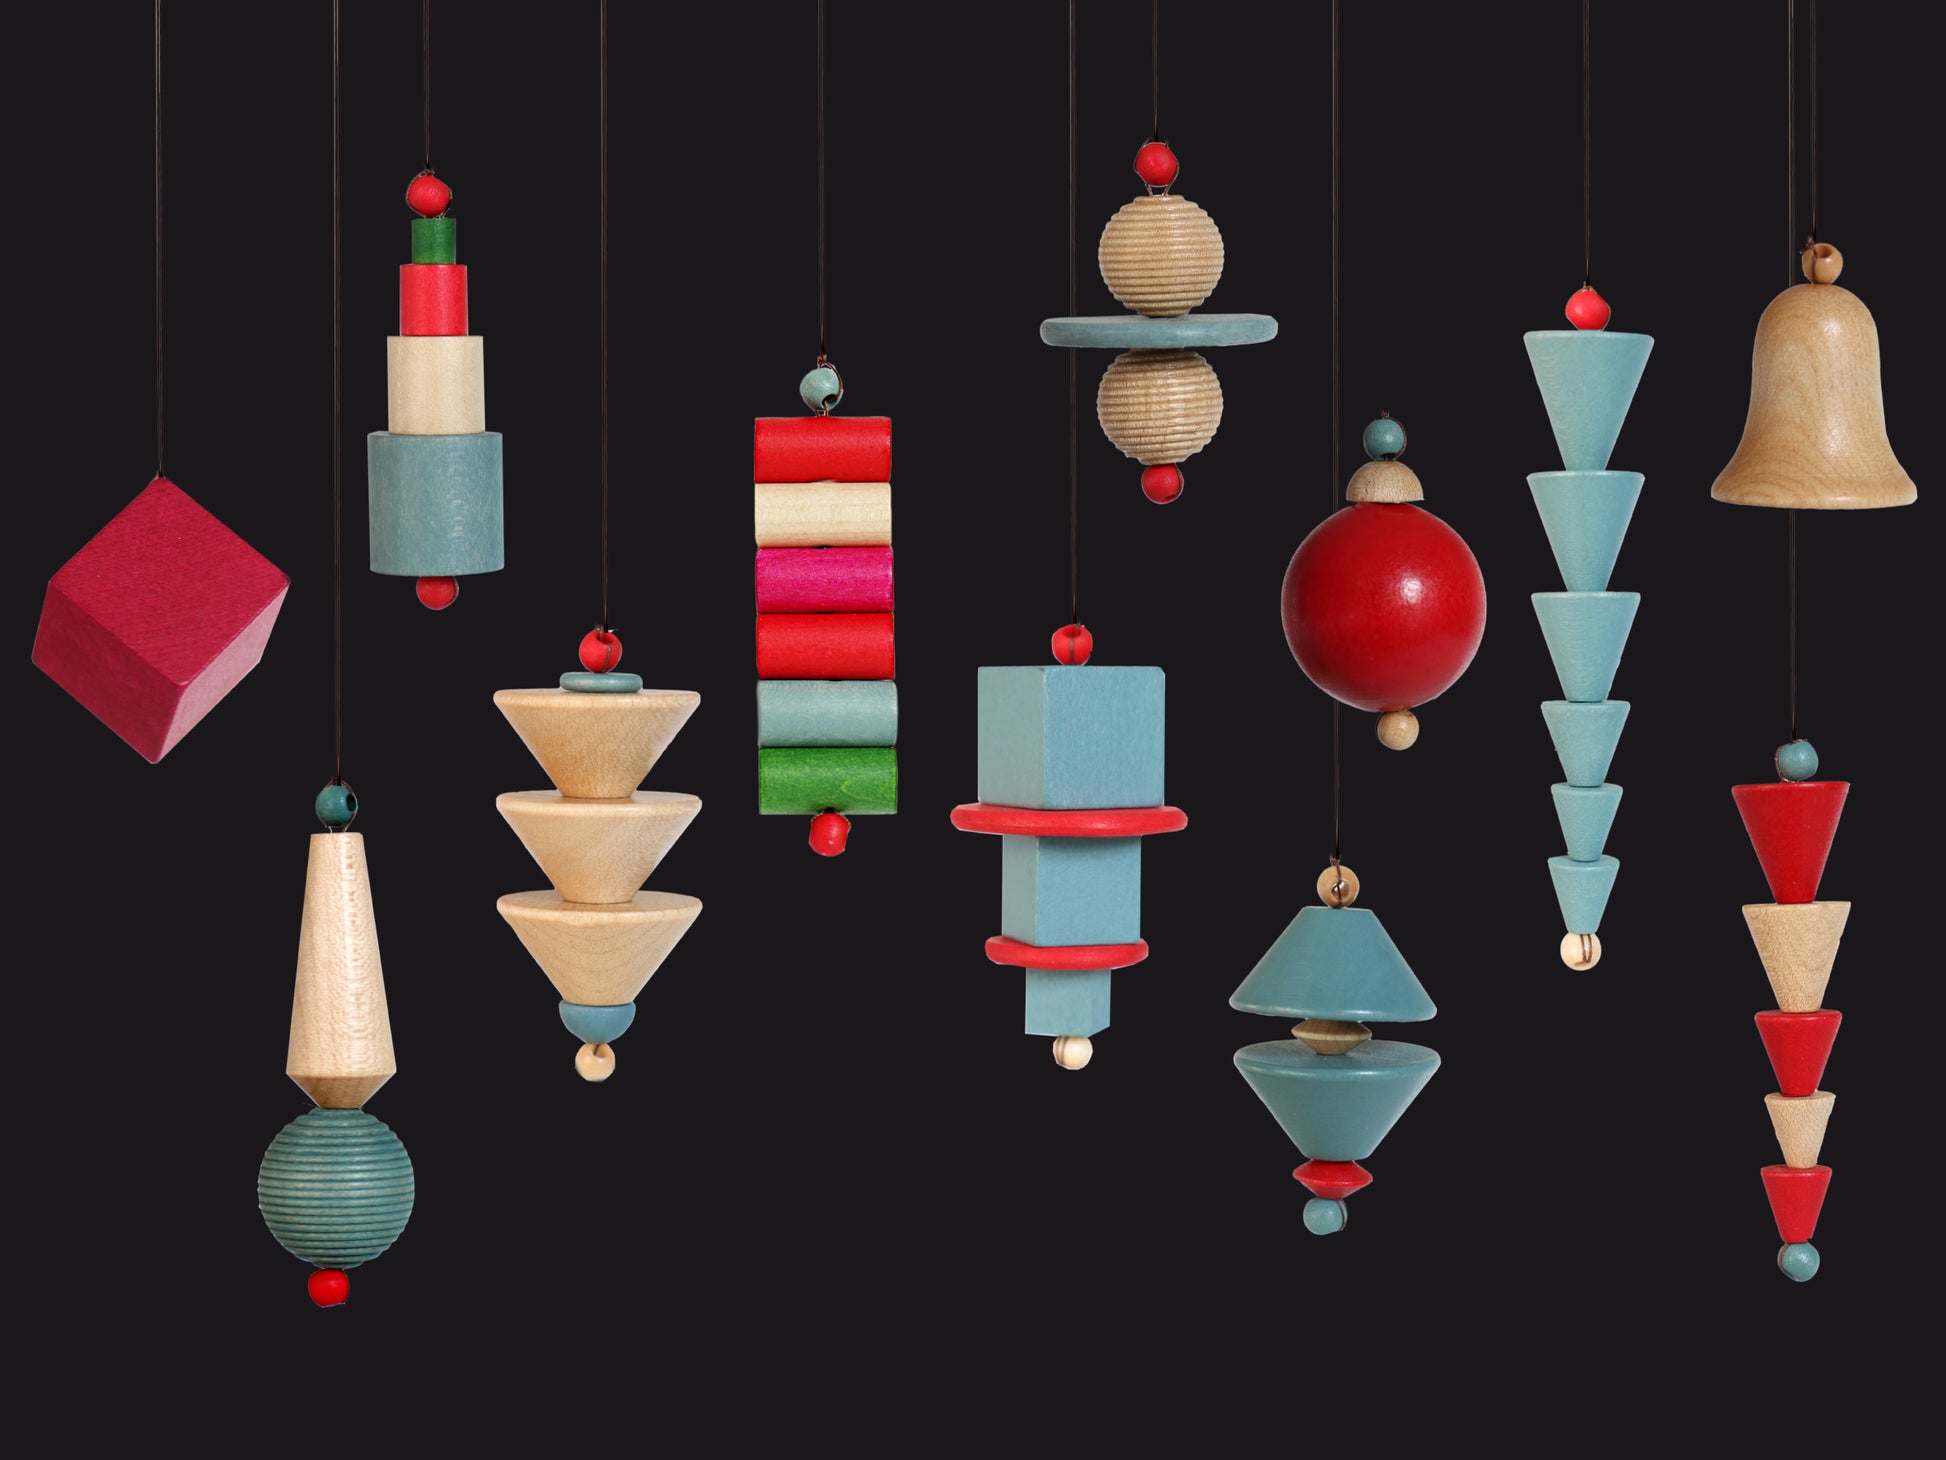 Bauhaus Christmas Ornaments